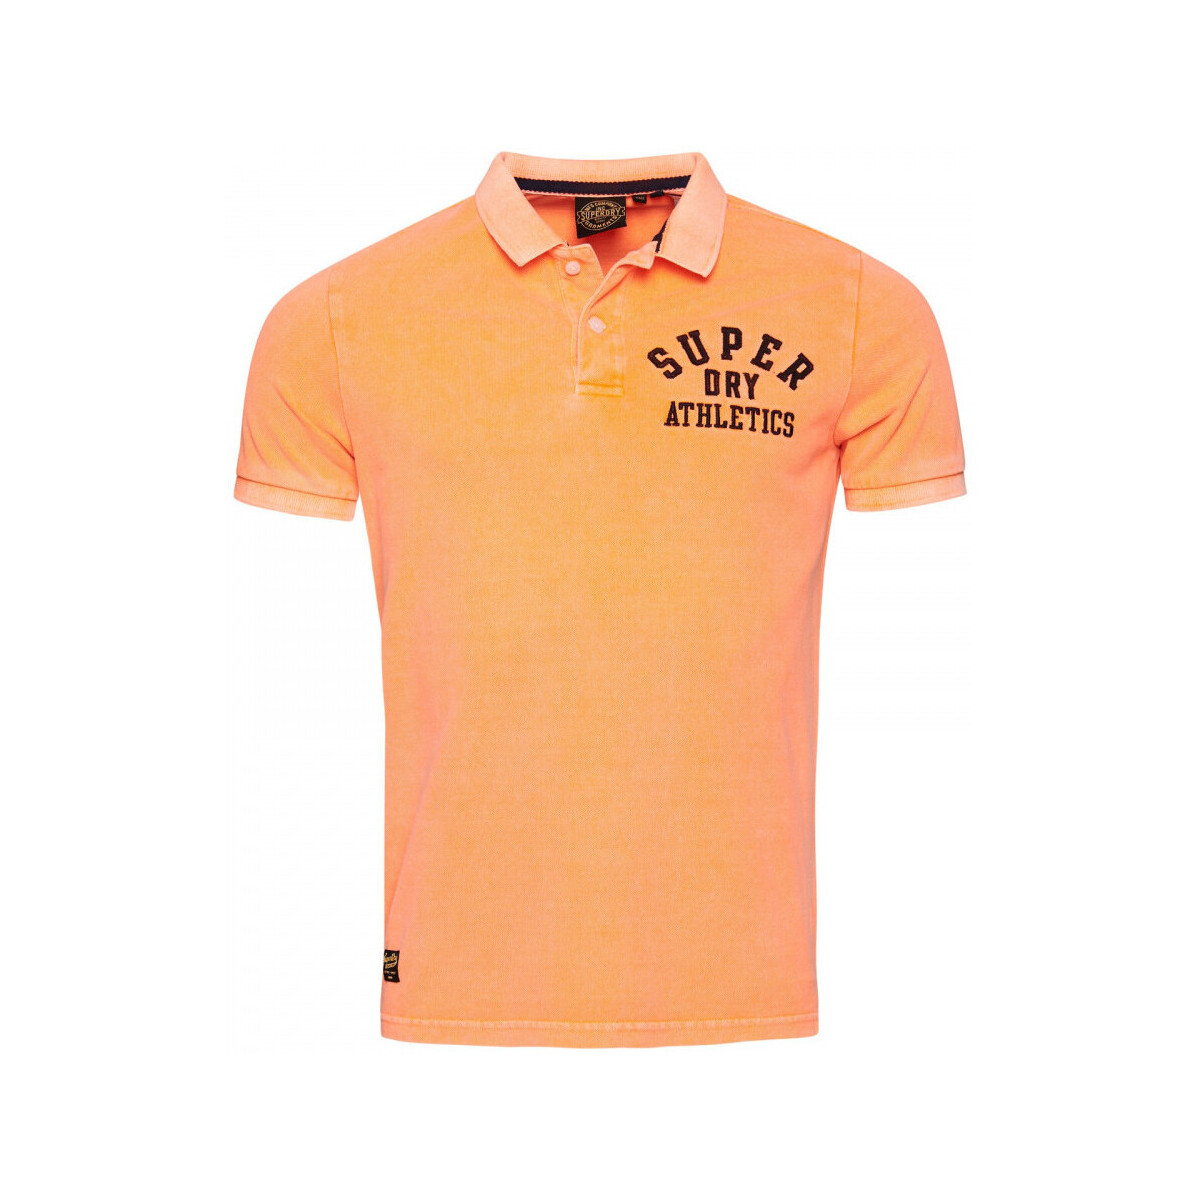 Îmbracaminte Bărbați Tricouri & Tricouri Polo Superdry Vintage superstate portocaliu